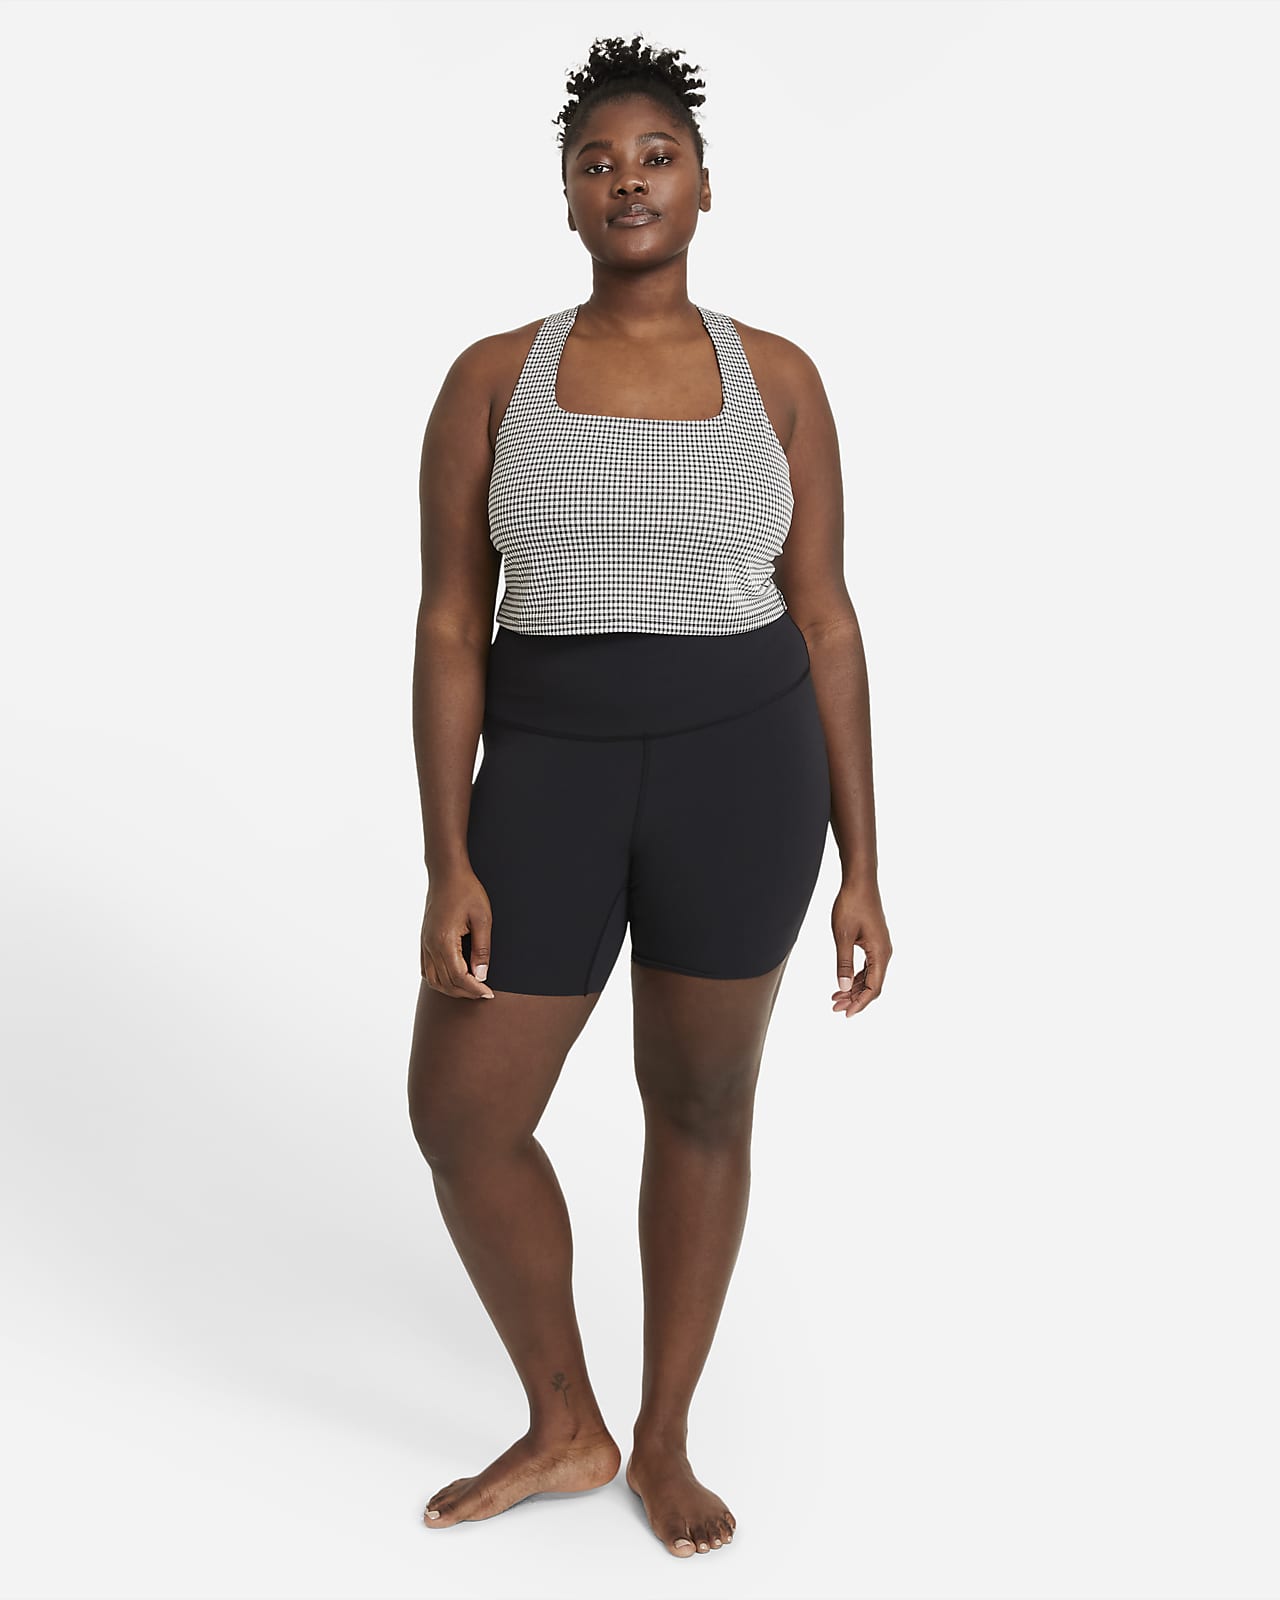 Nike Women's Dri-FIT Cropped Gingham Yoga Tank Top size XXL